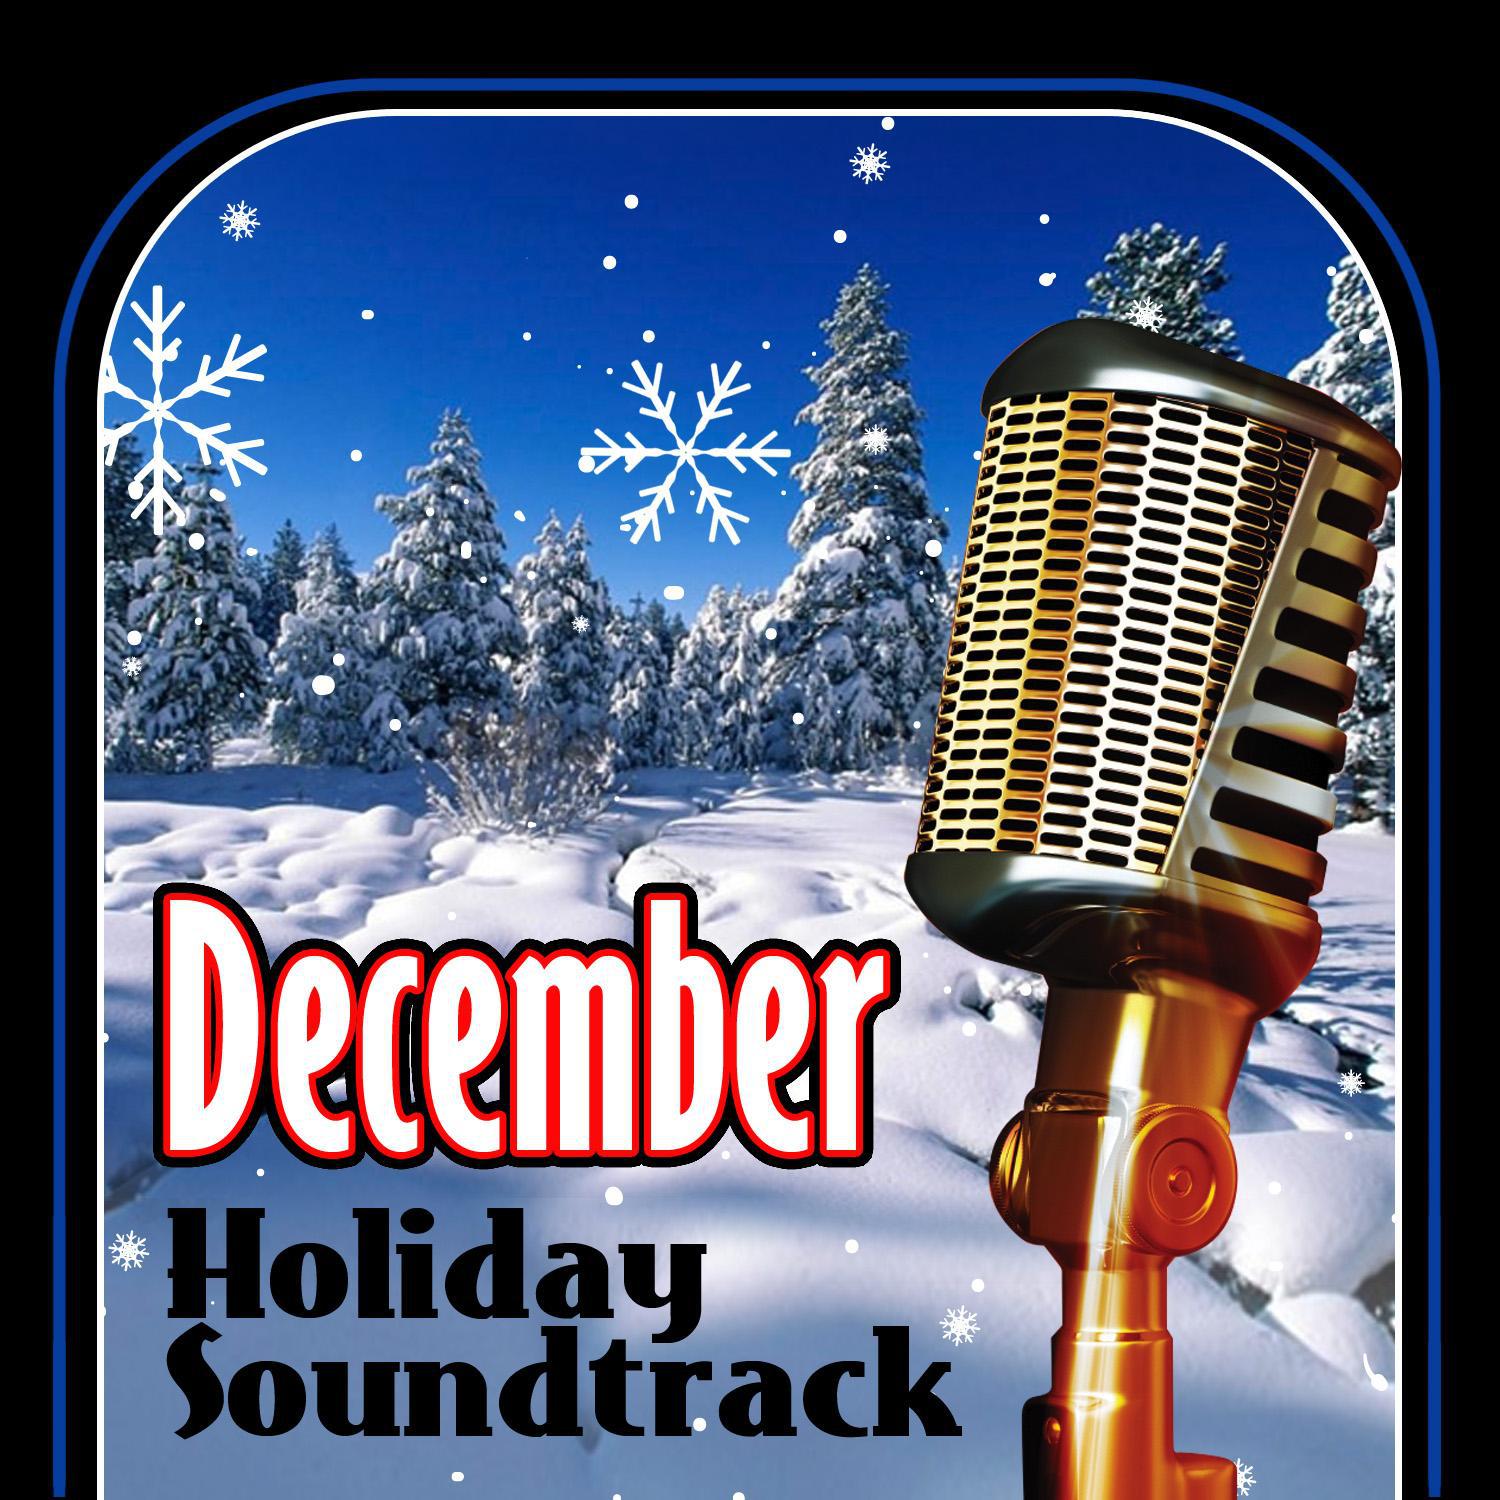 December Holiday Soundtrack